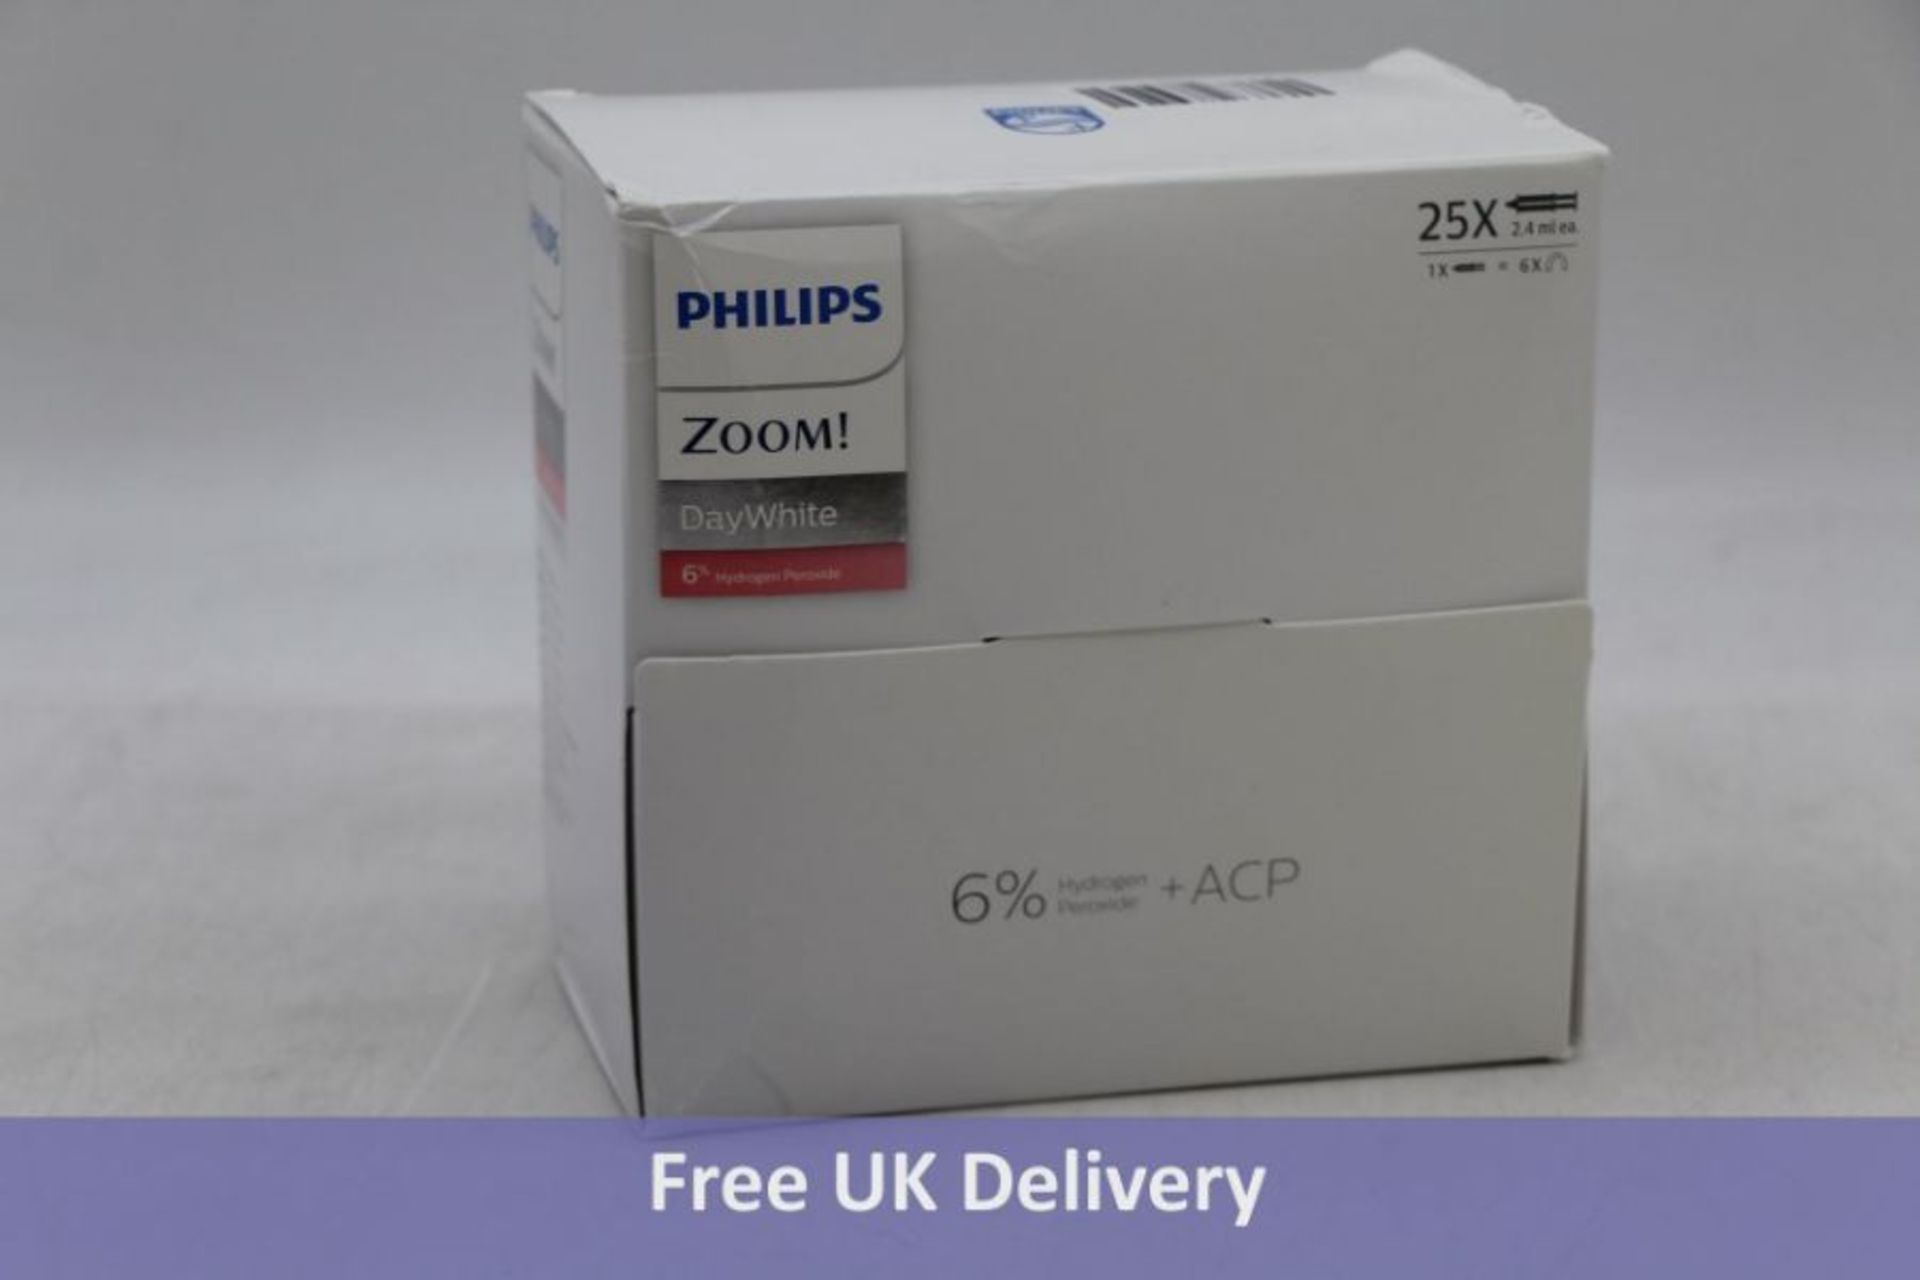 Philips Zoom DayWhite 6% Take-home Whitening, 25x 2.4ml. Box damaged, Expiry 08/2023